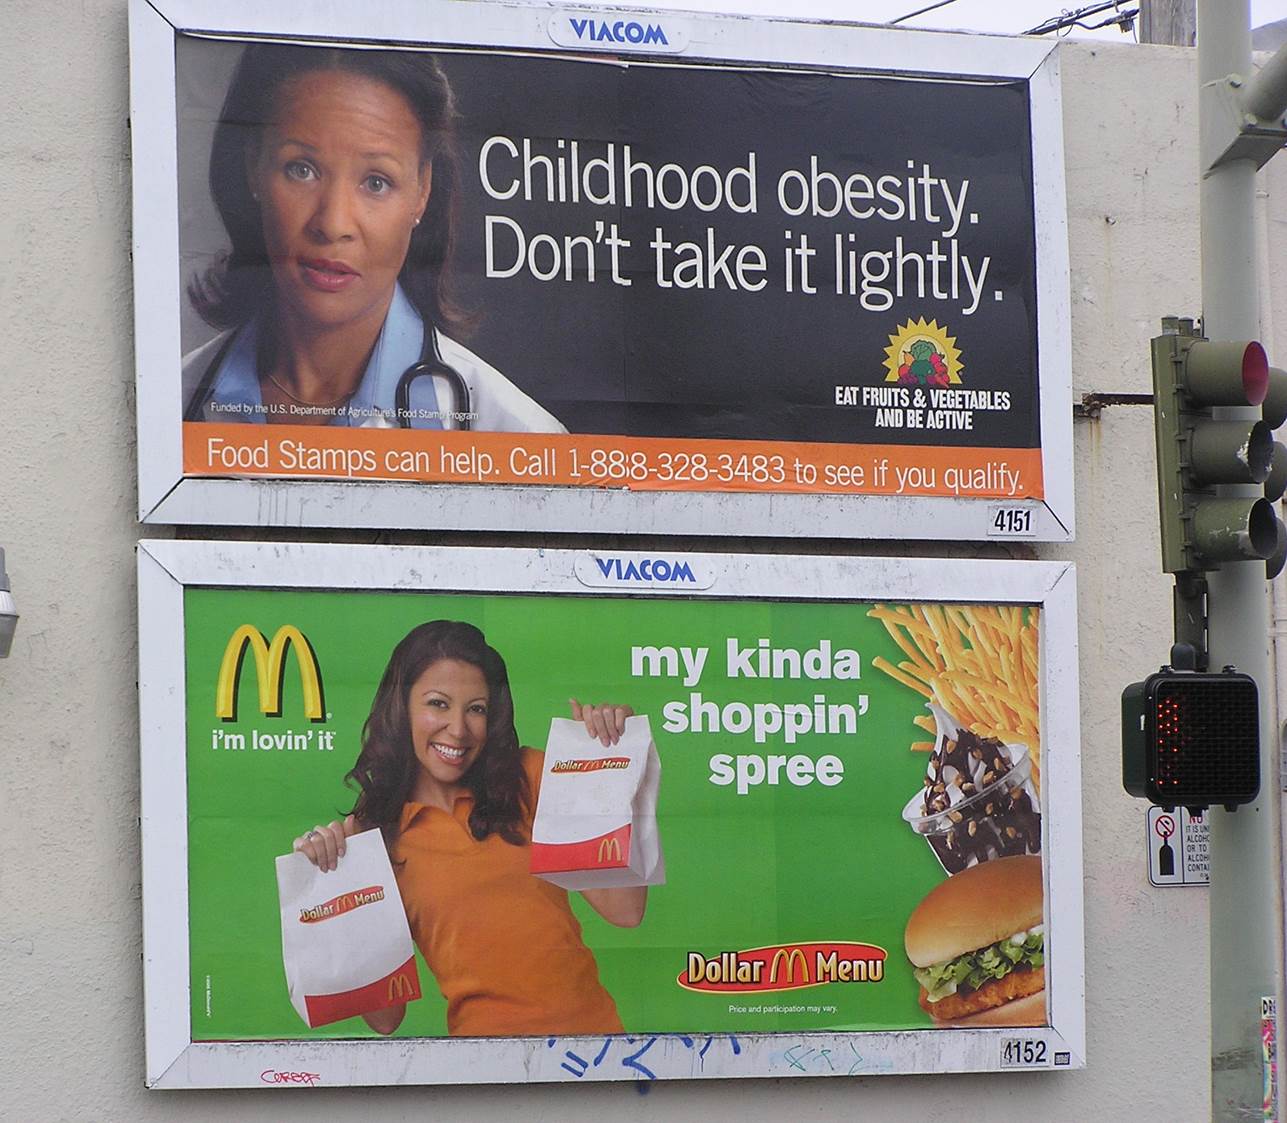 McDonald's billboard next to obesity prevention billboard